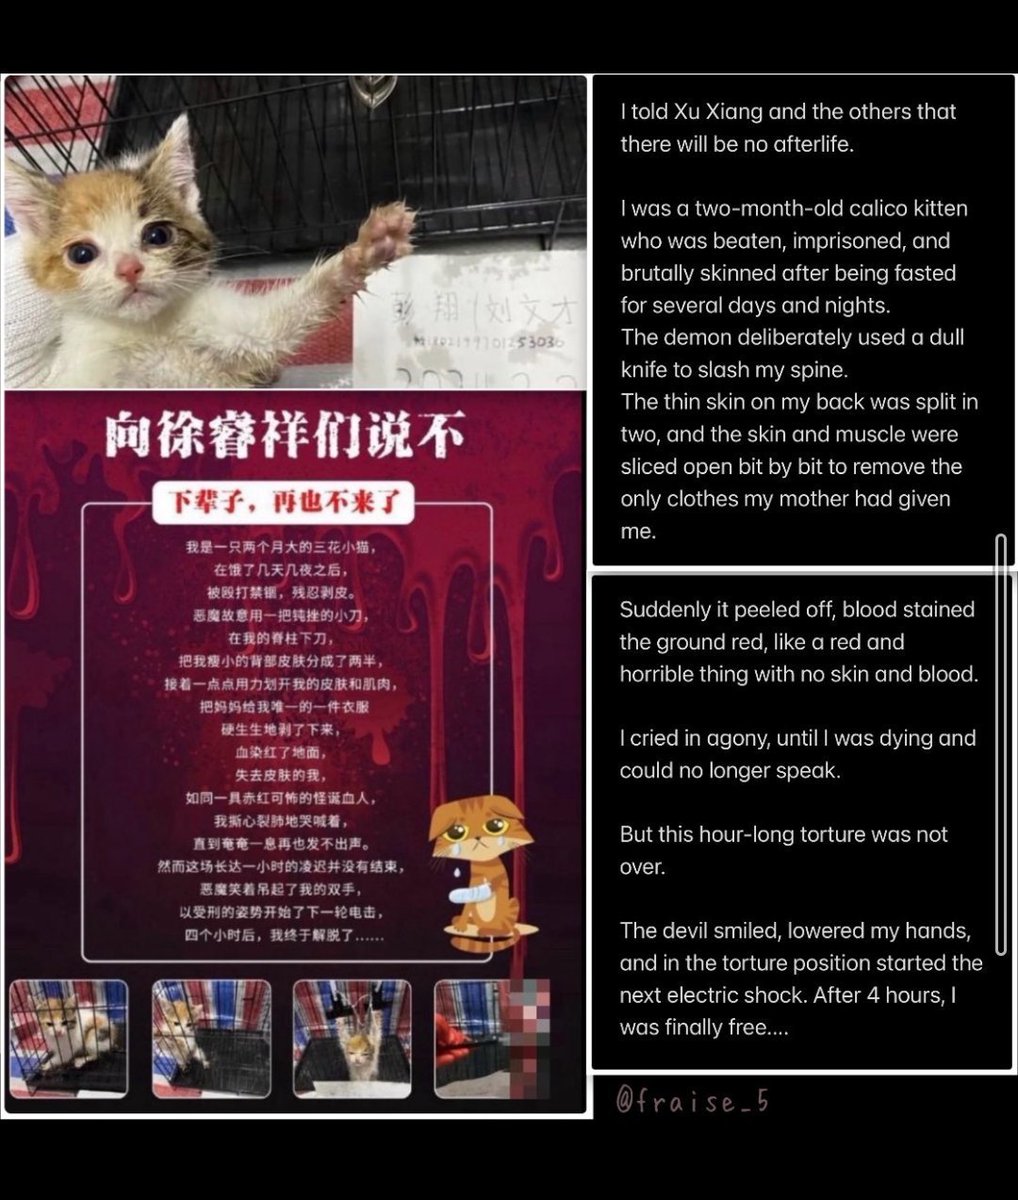 @CGHuangPingNY #BoycottChina
ANIMAL ABUSERS